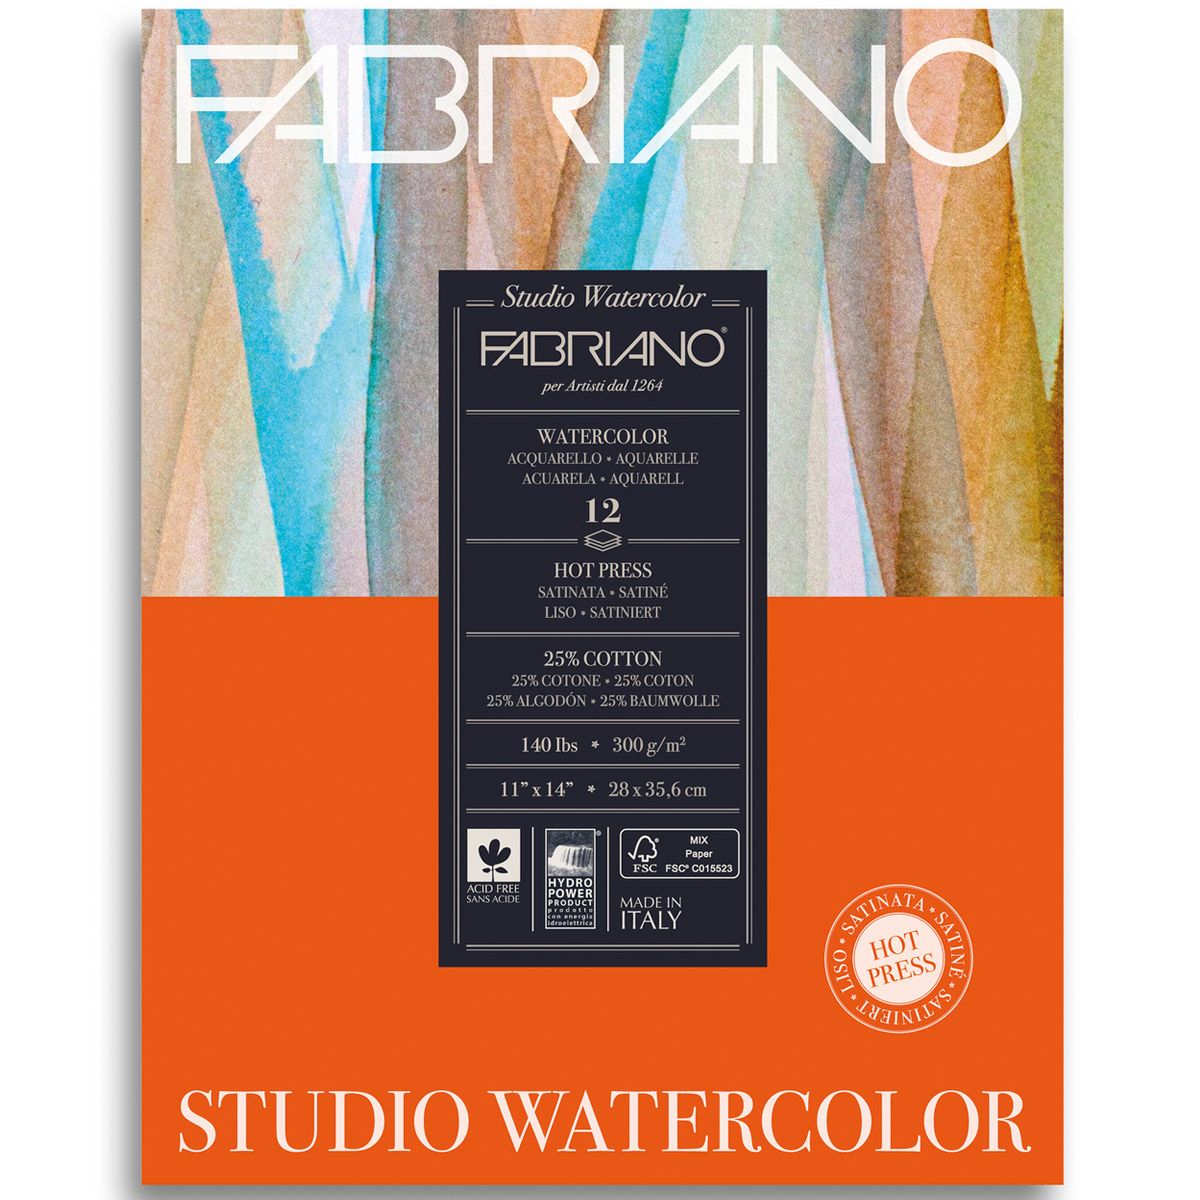 Fabriano Studio Watercolour Pad HP-20 sheets, 140lb 11x14 inch